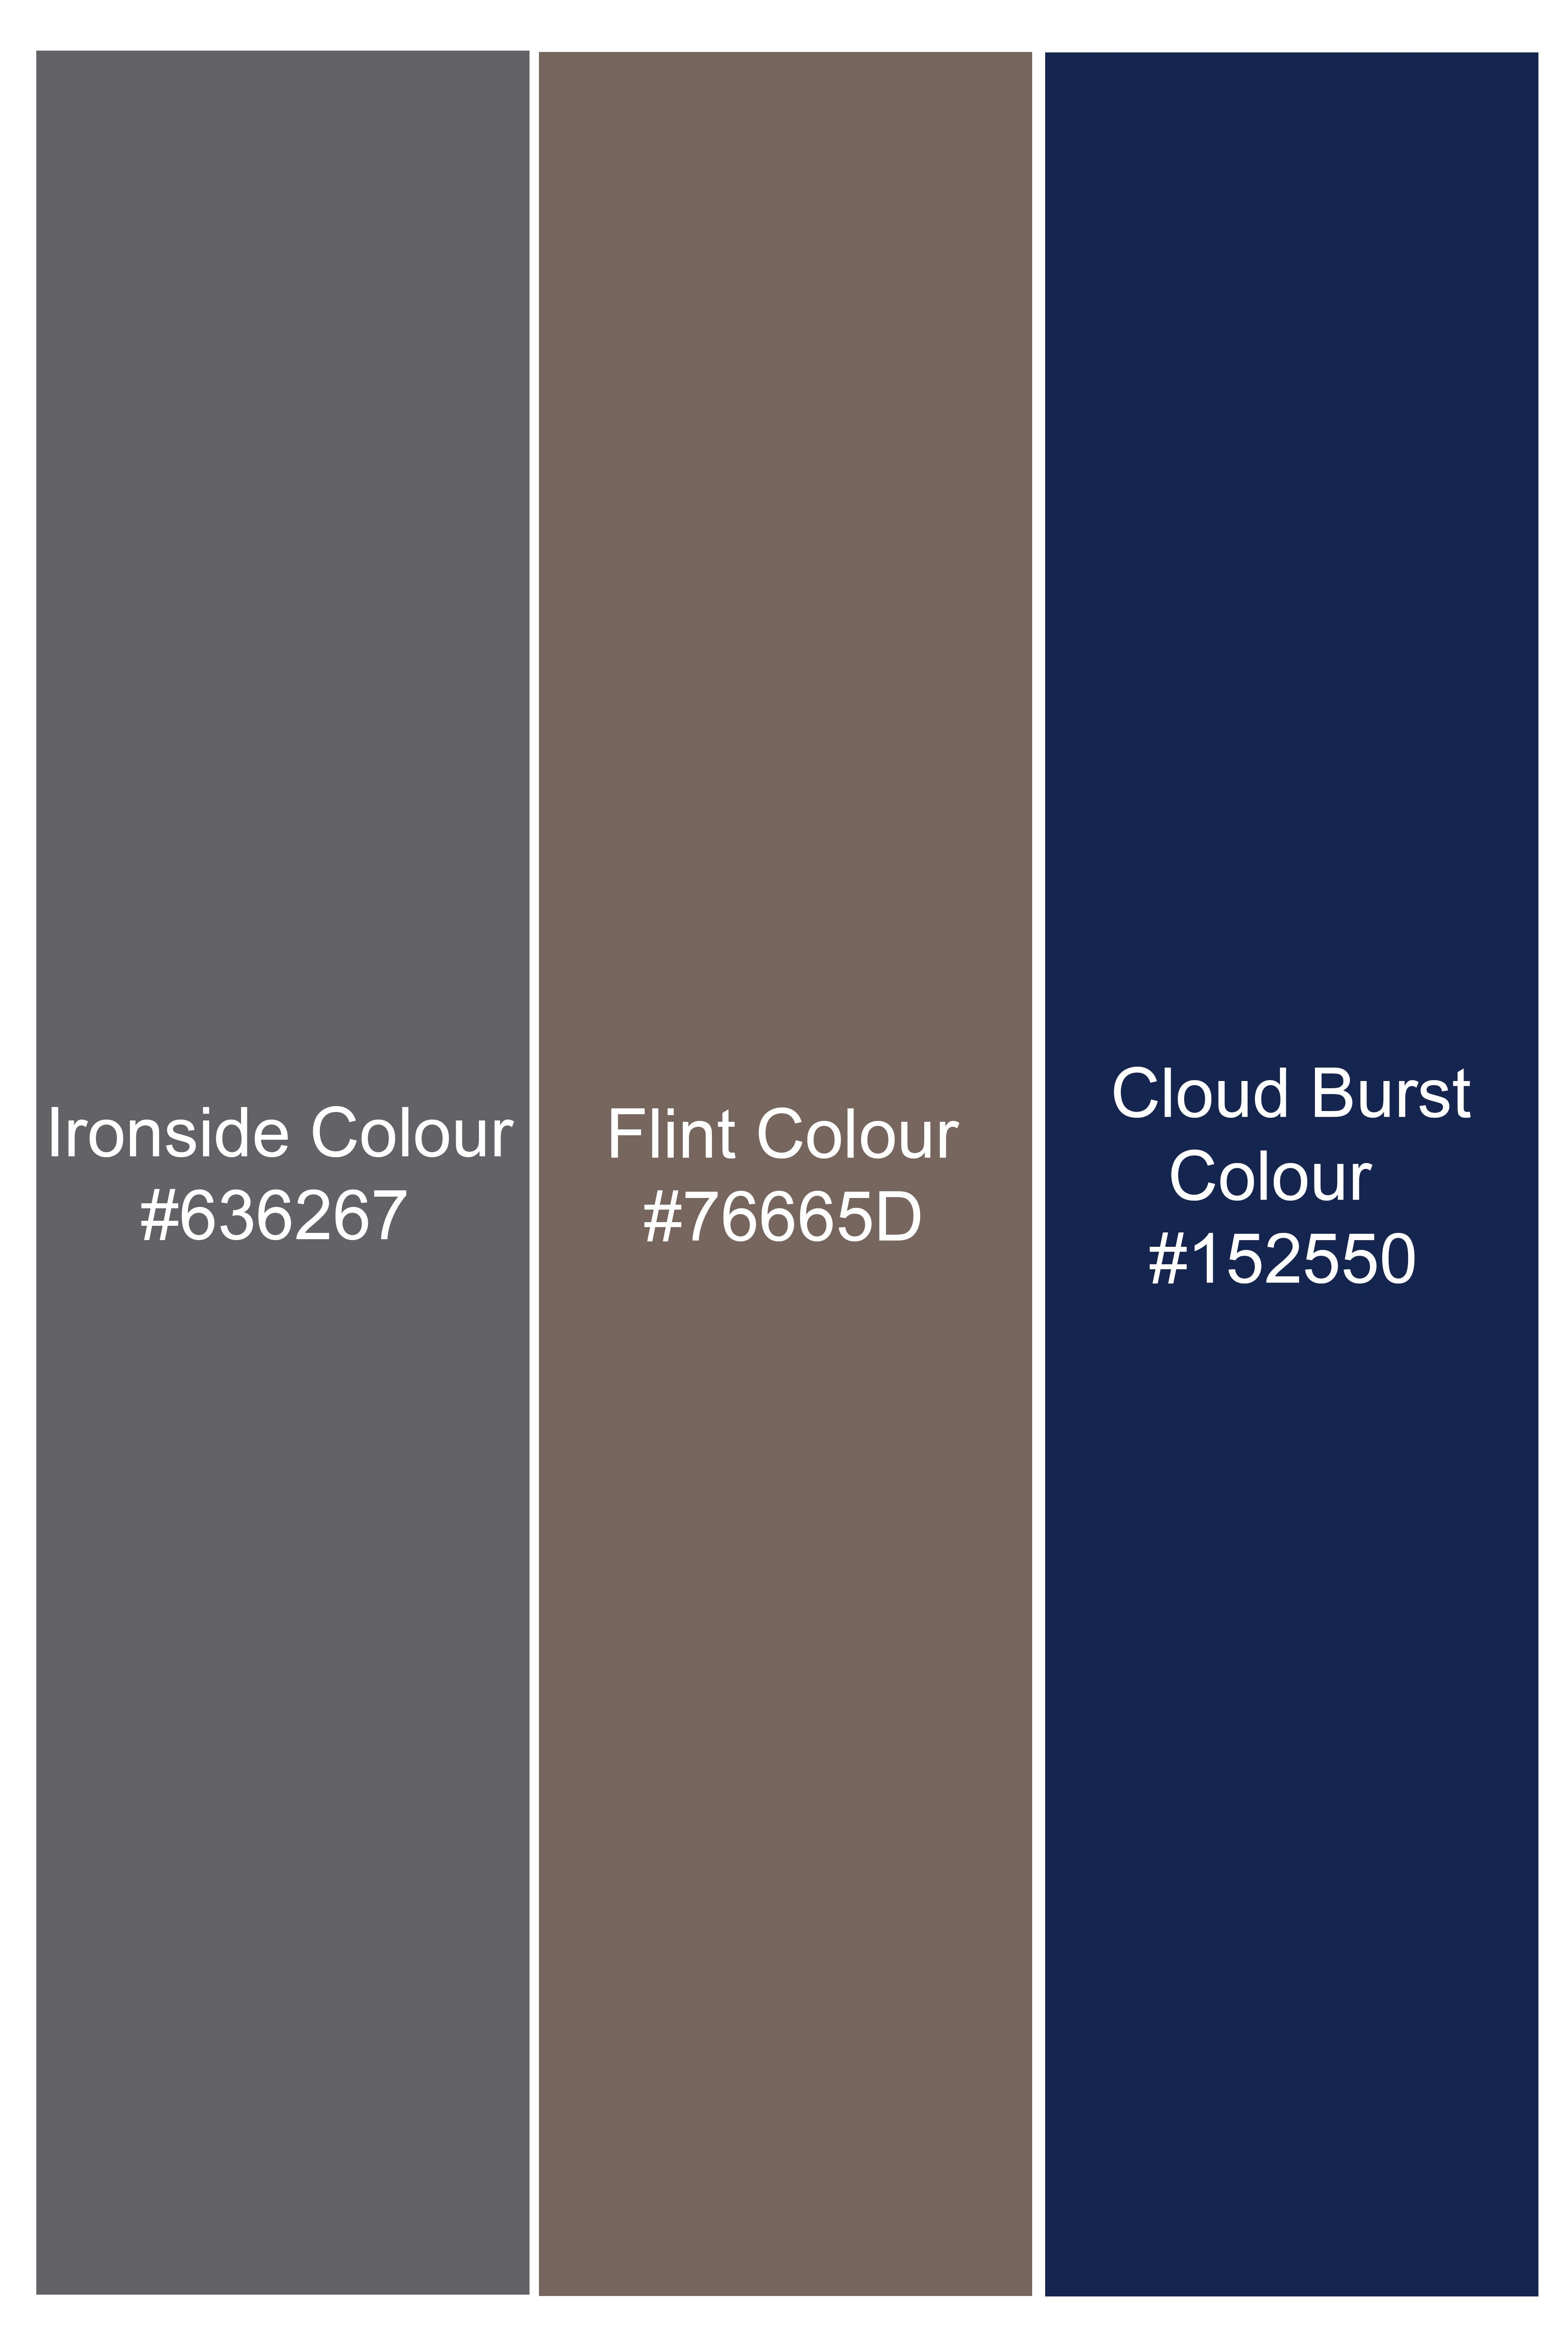 Ironside Grey and Cloud Burst Blue Plaid Wool Rich Waistcoat V3073-36, V3073-38, V3073-40, V3073-42, V3073-44, V3073-46, V3073-48, V3073-50, V3073-73, V3073-54, V3073-56, V3073-58, V3073-60